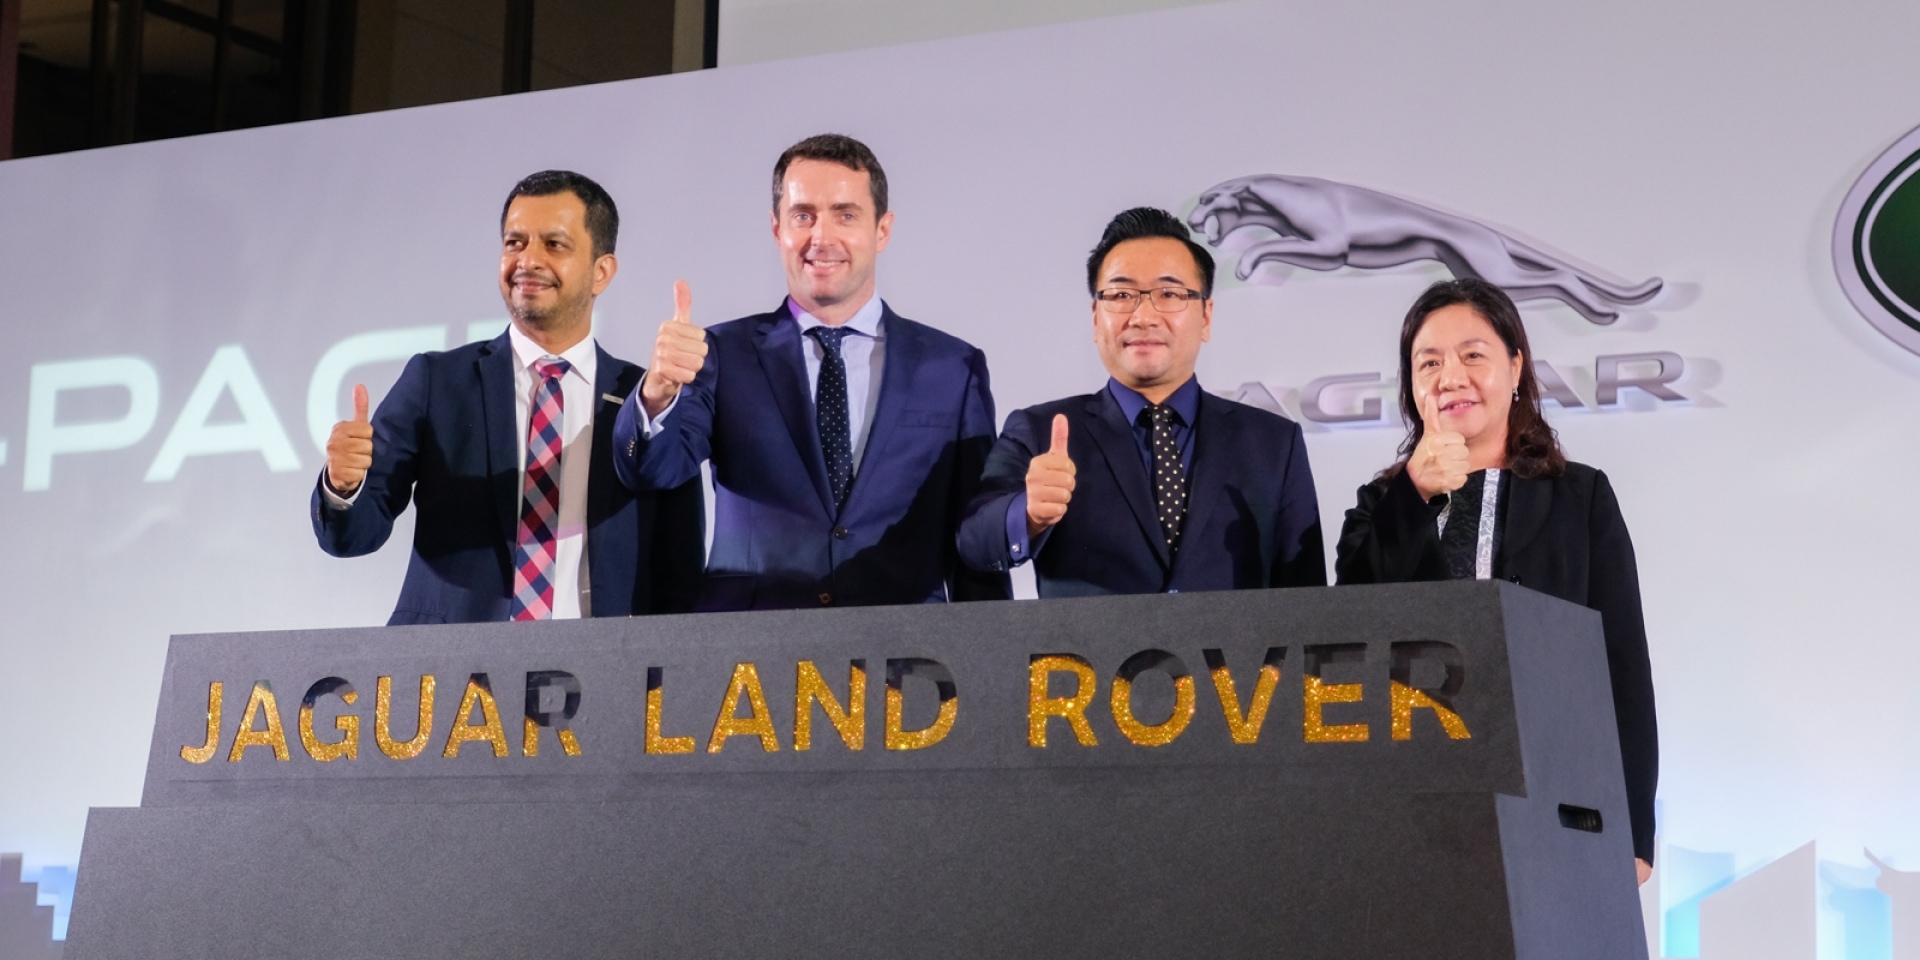 JAGUAR LAND ROVER 台灣分公司正式成立全面提升顧客品牌體驗  打造英倫雙品牌嶄新面貌